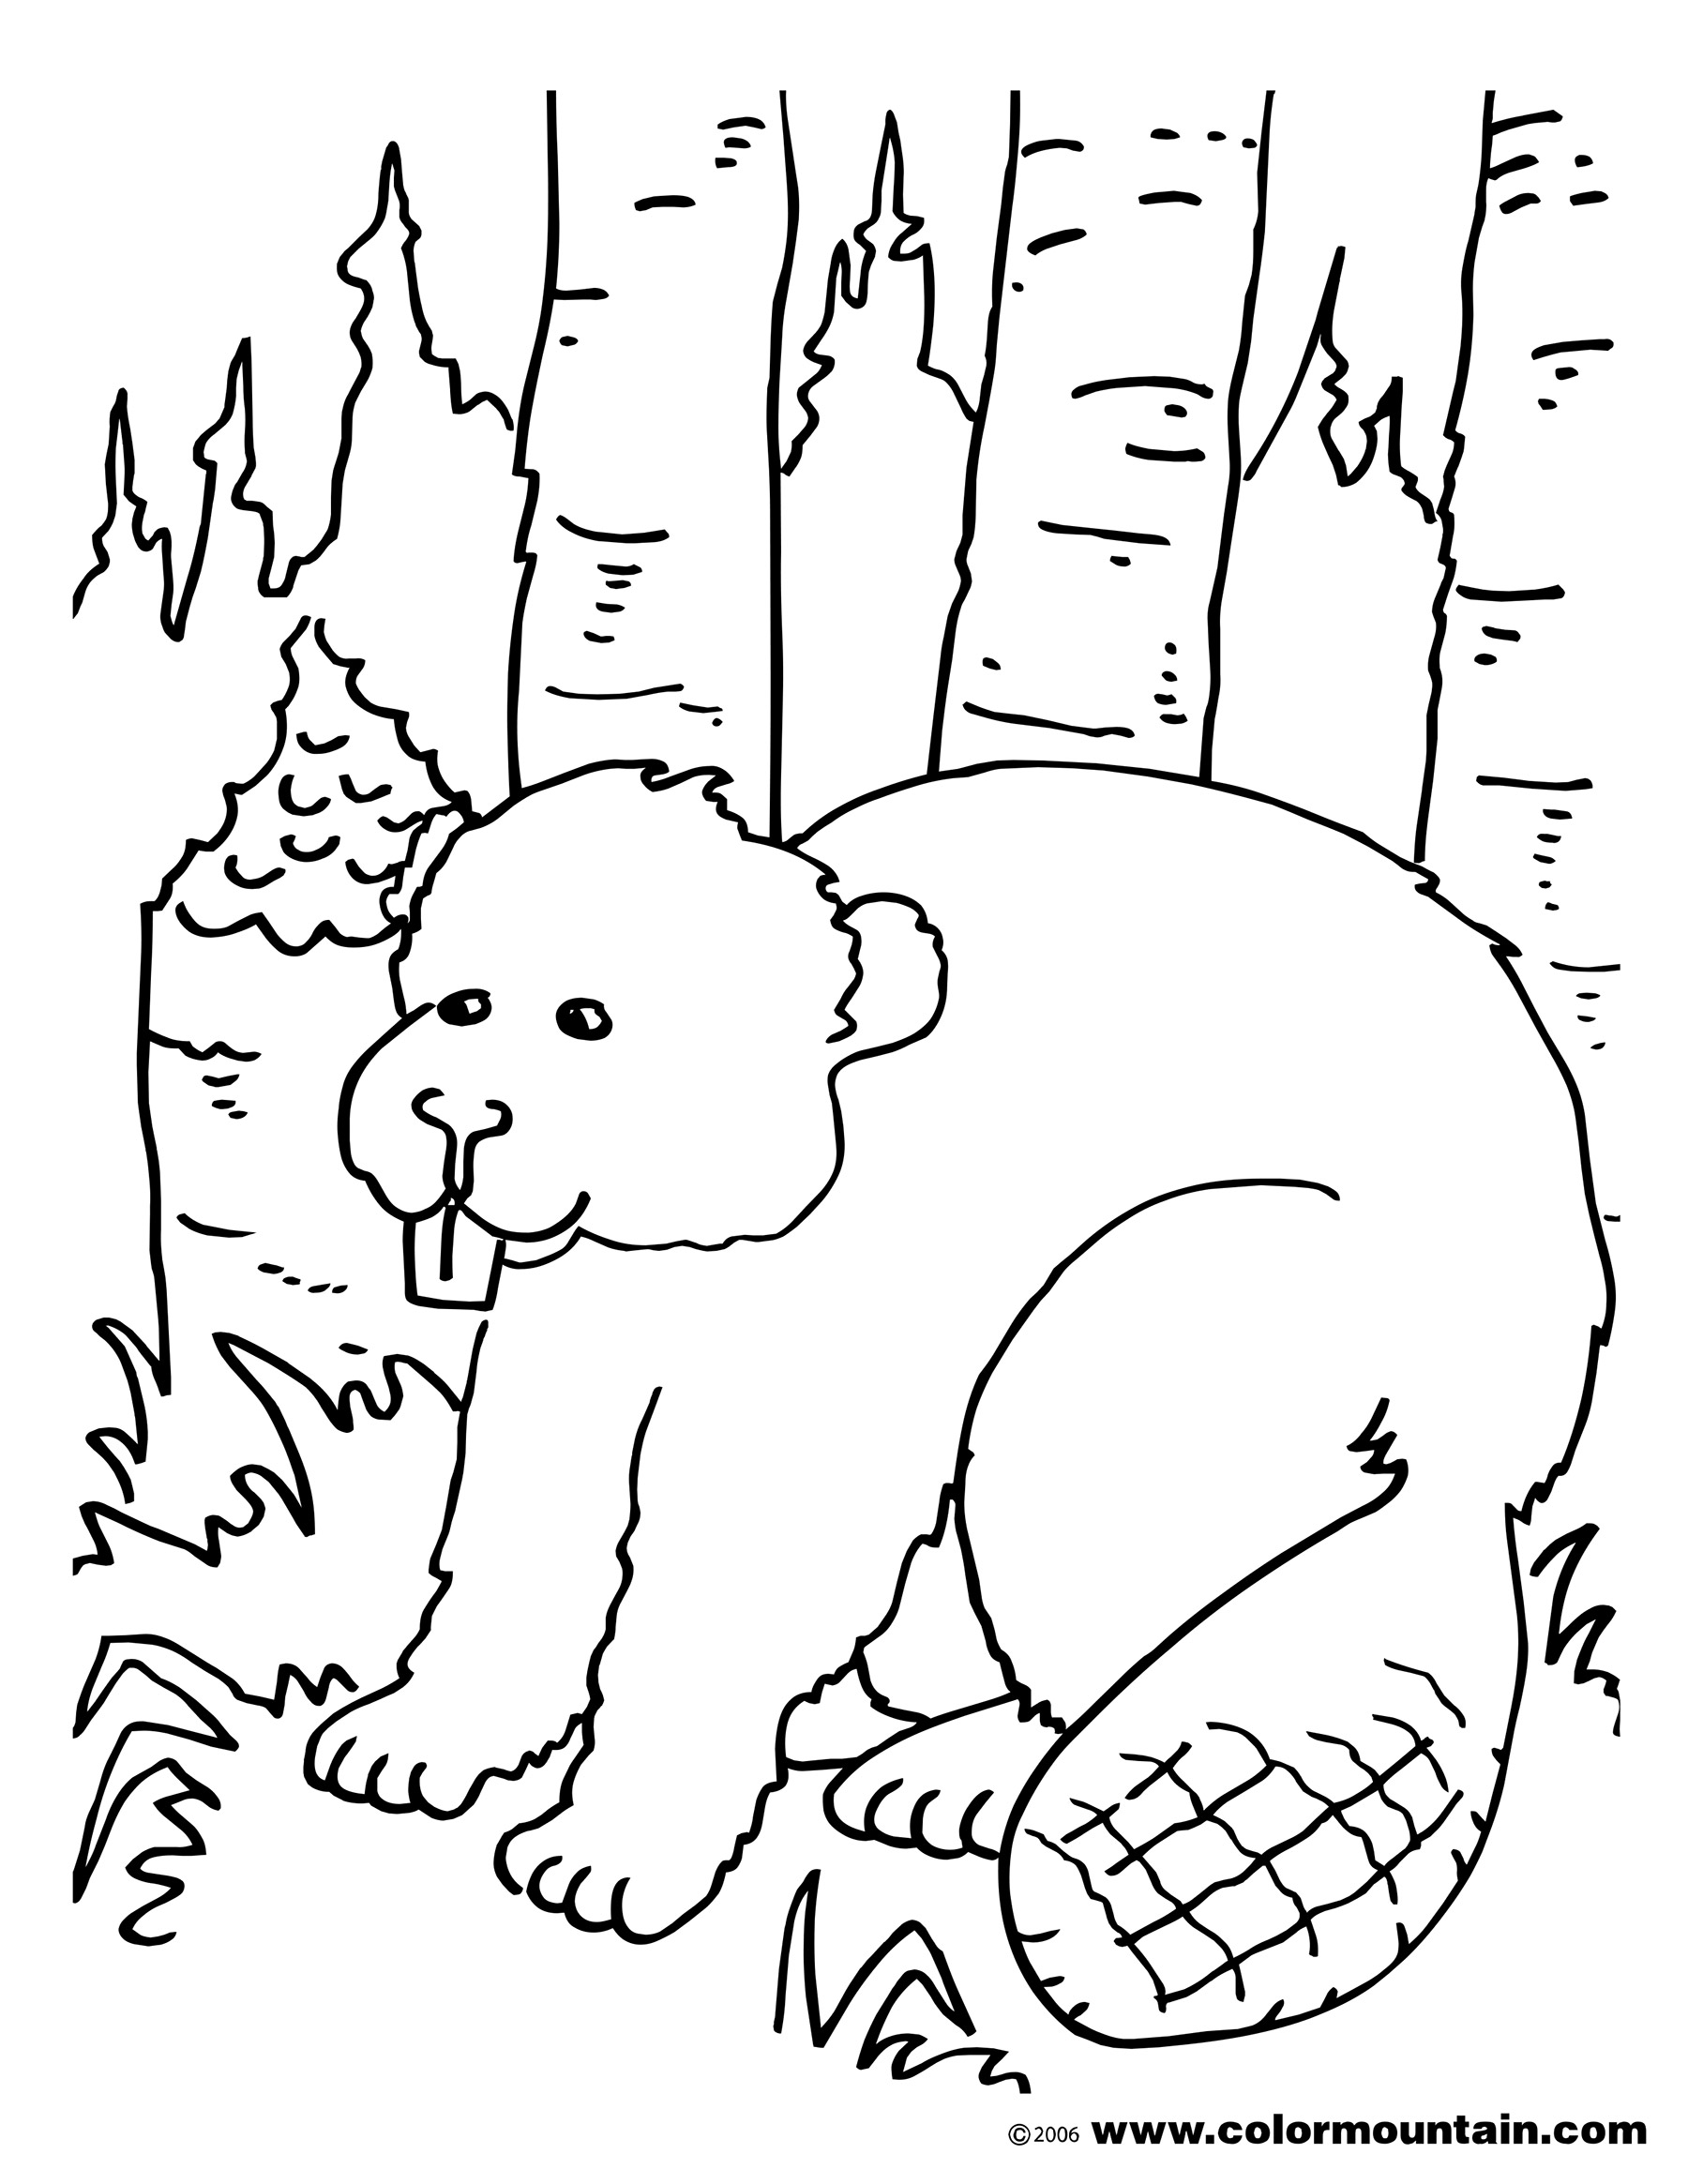 Beaver Coloring Page At GetColorings.com | Free Printable Colorings ...